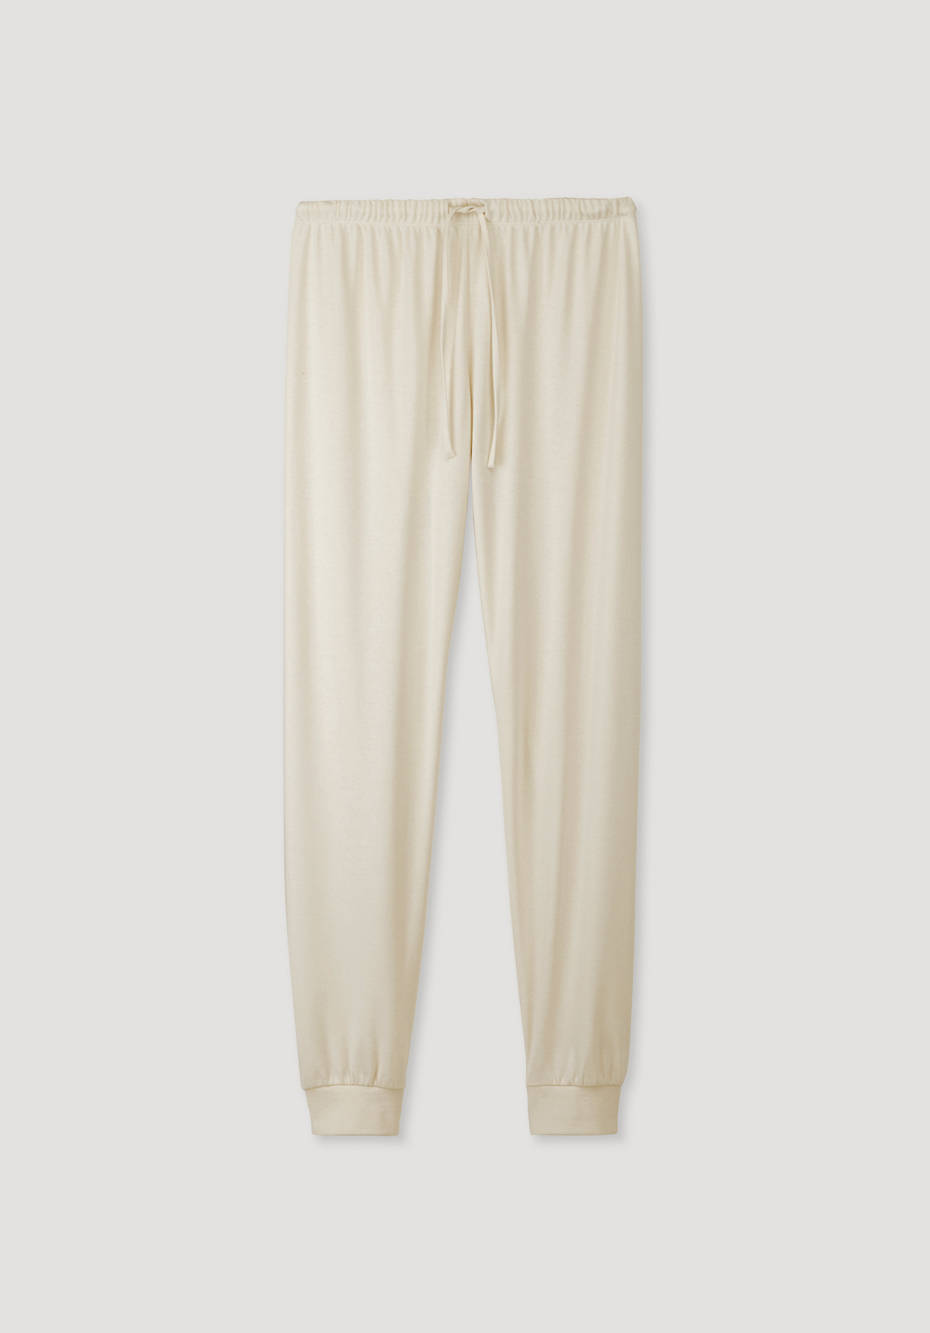 PureNature pajama pants made of pure organic cotton